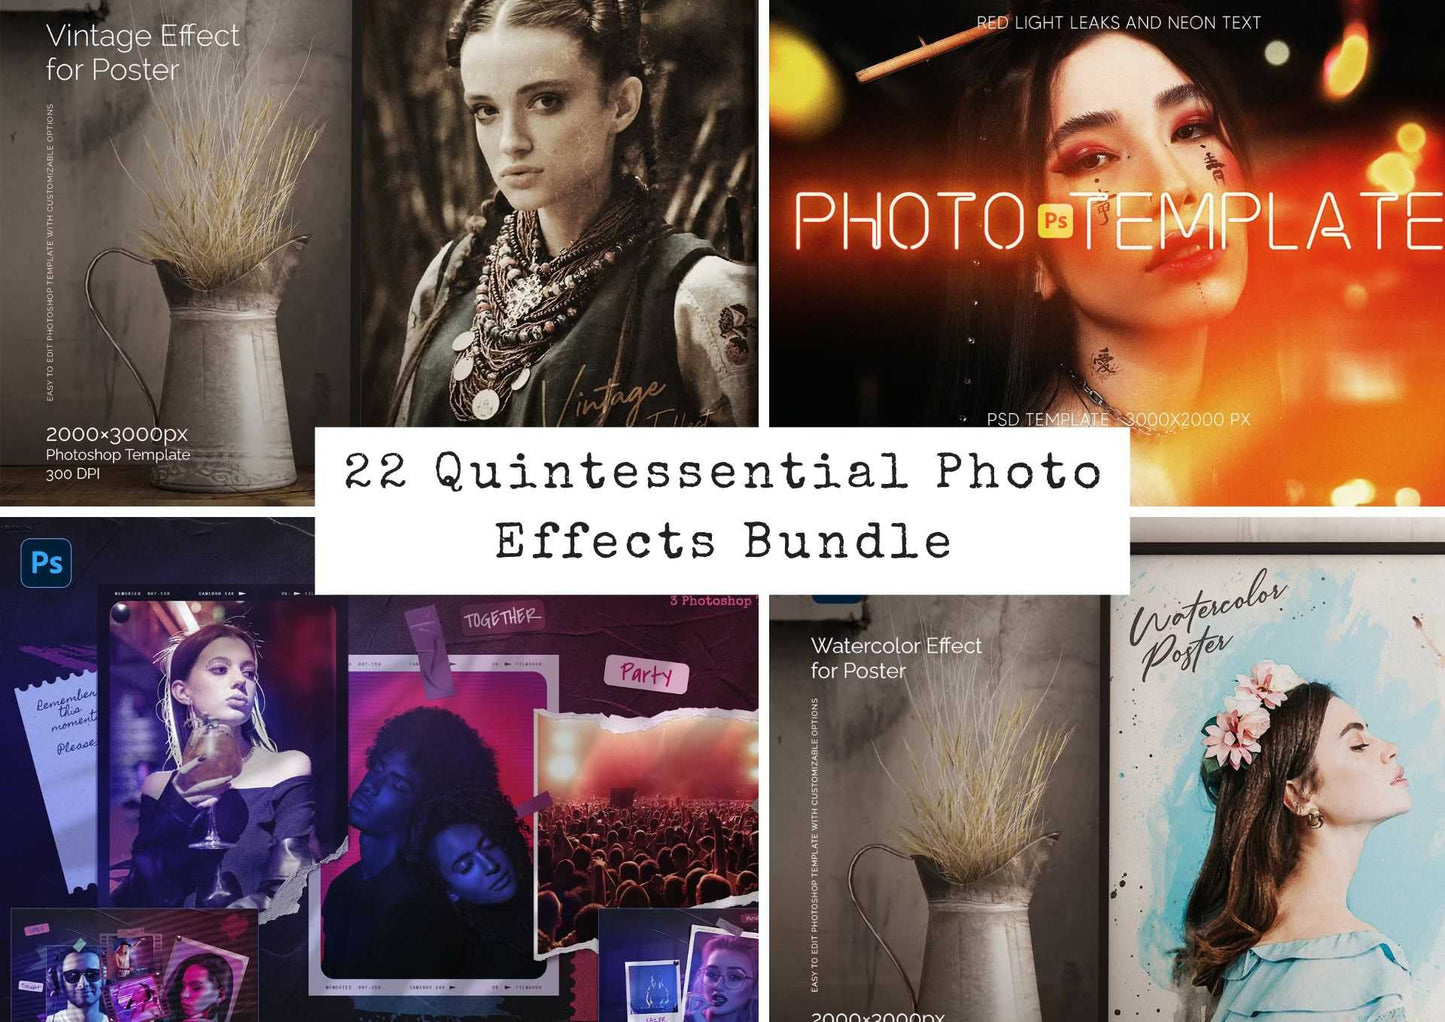 22 Quintessential Photo Effects Bundle - Photoboto